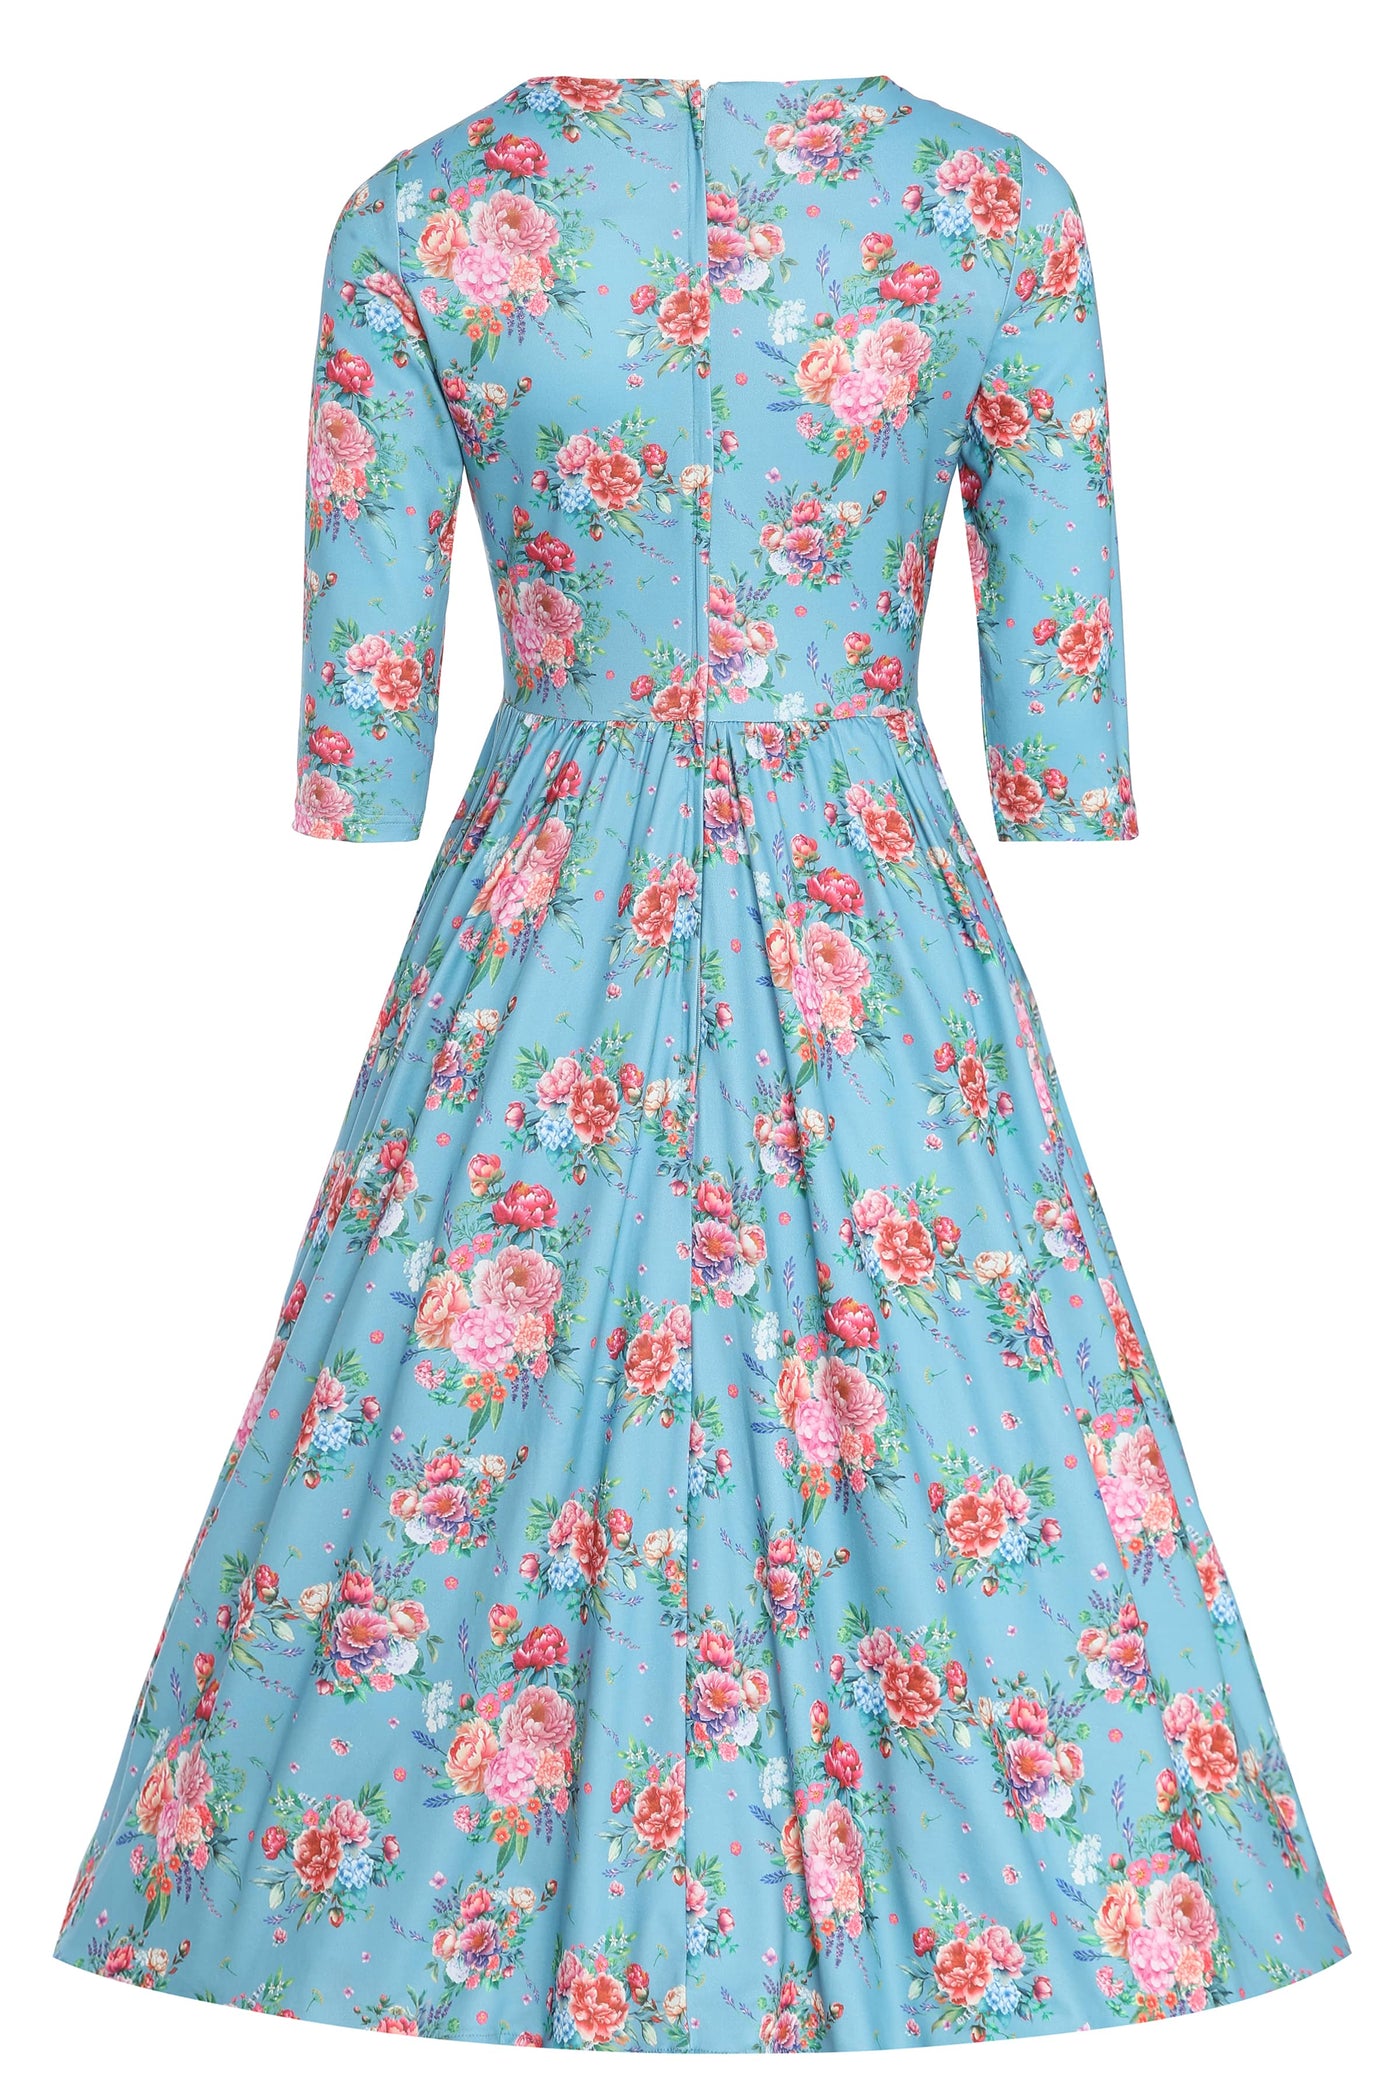 billie blue floral english garden dress behind angle